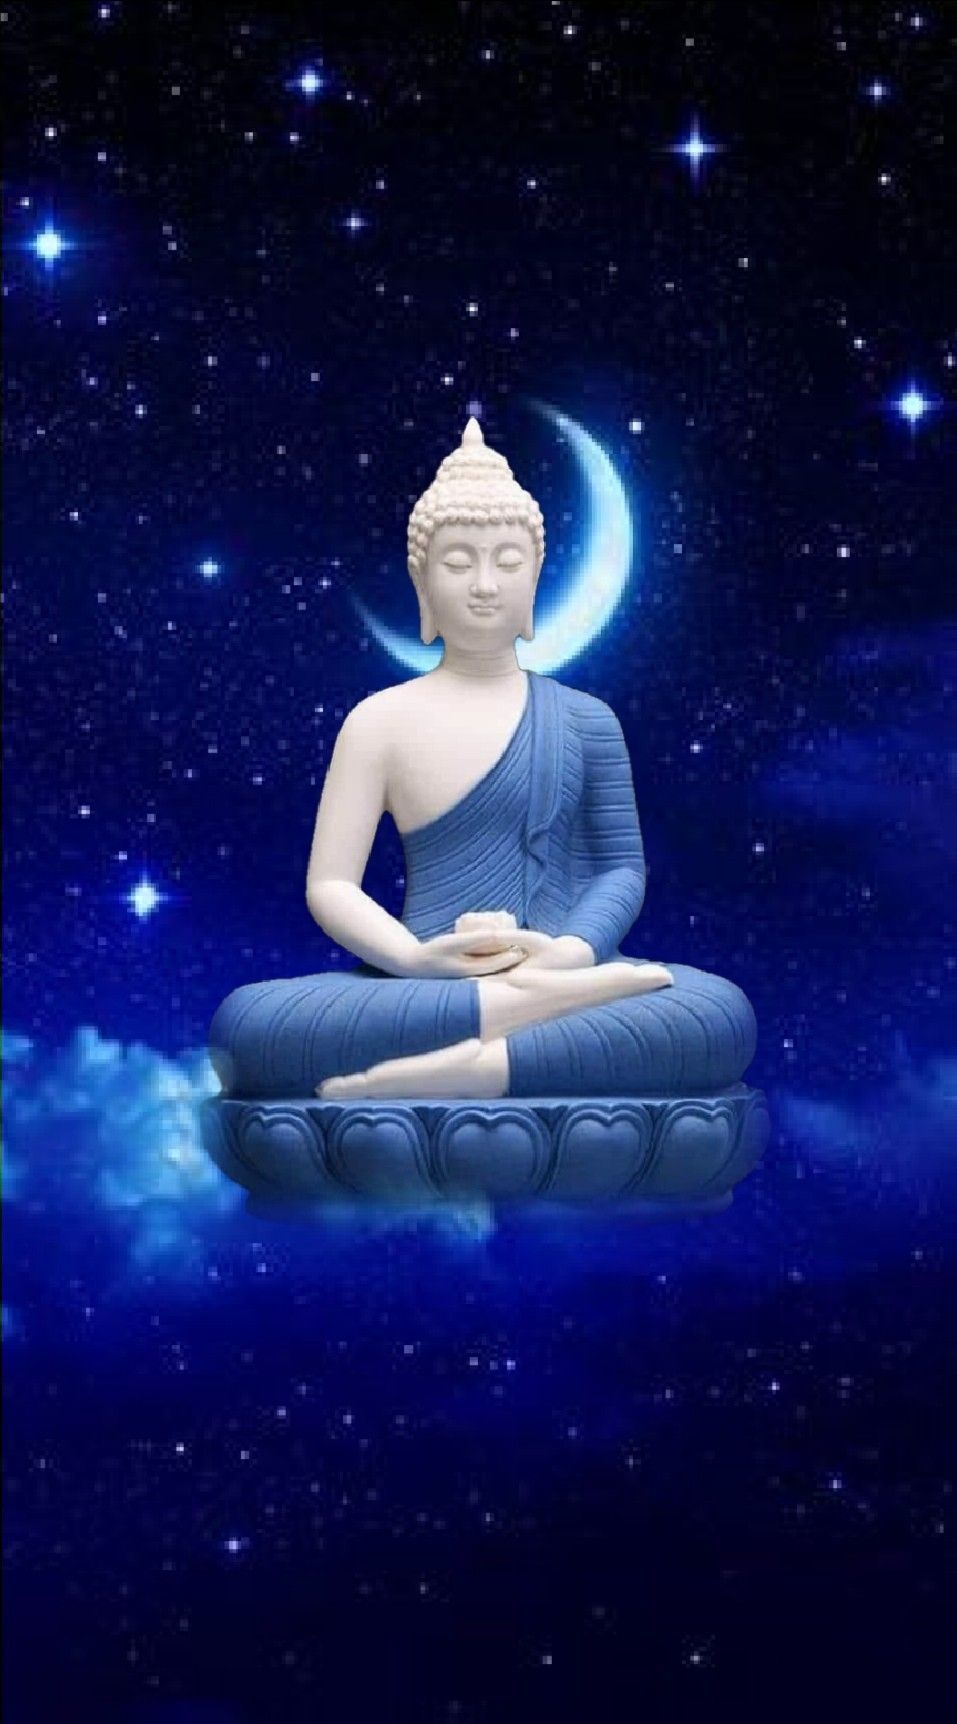  Buddha Hintergrundbild 957x1724. Buddha​ image​